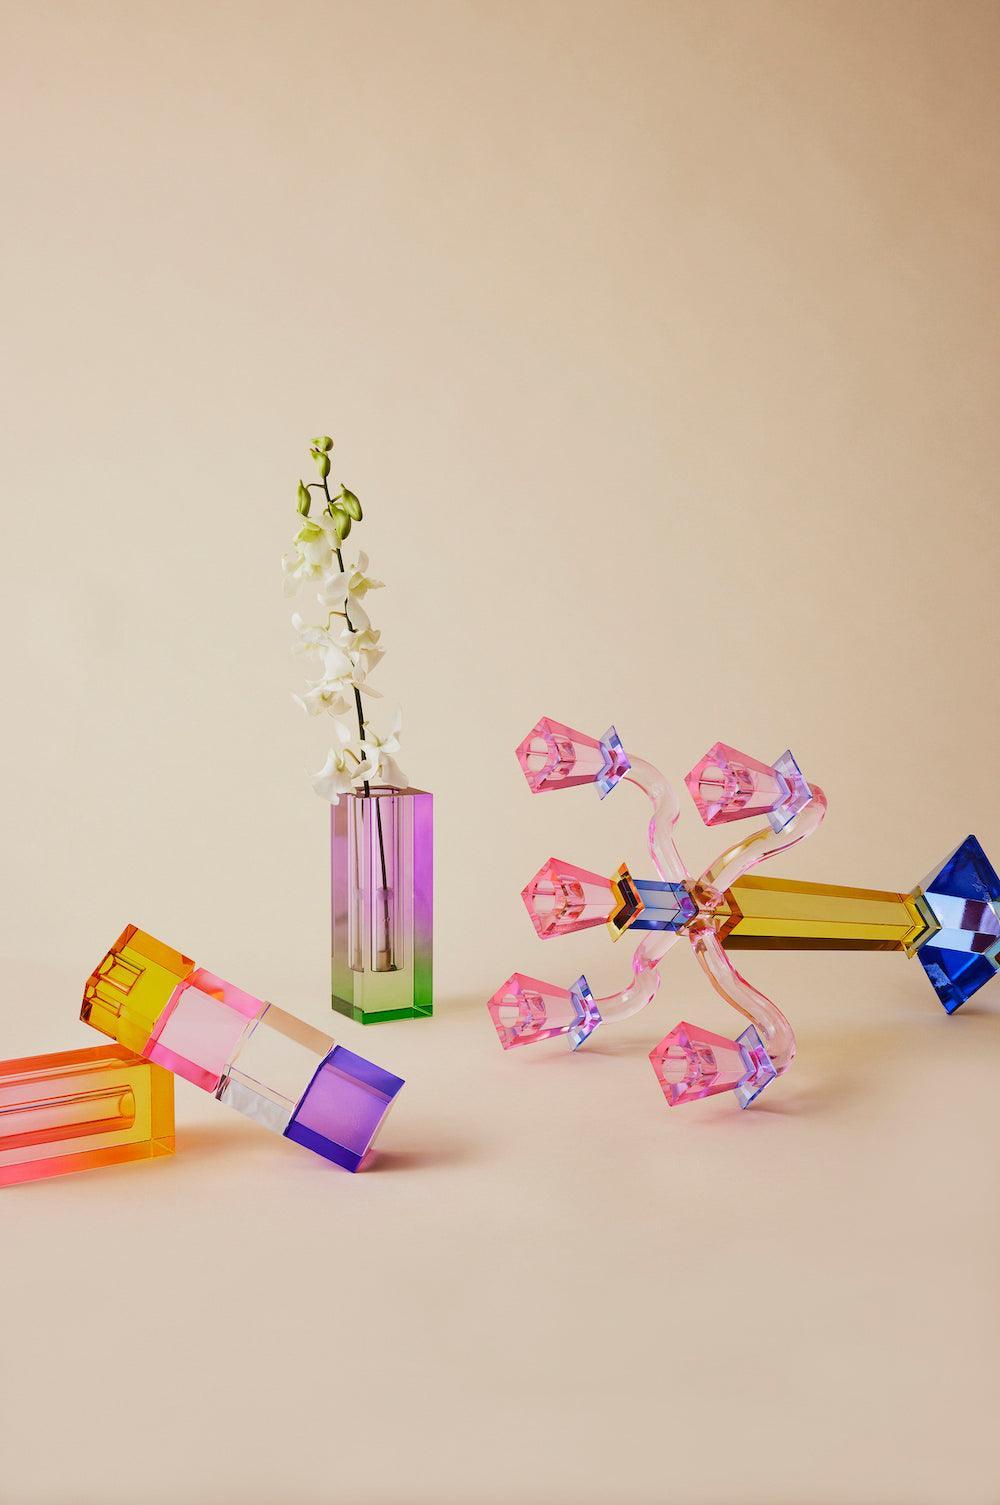 Miss Étoile - Vase aus schwerem Kristallglas | Rose - Codeso Living